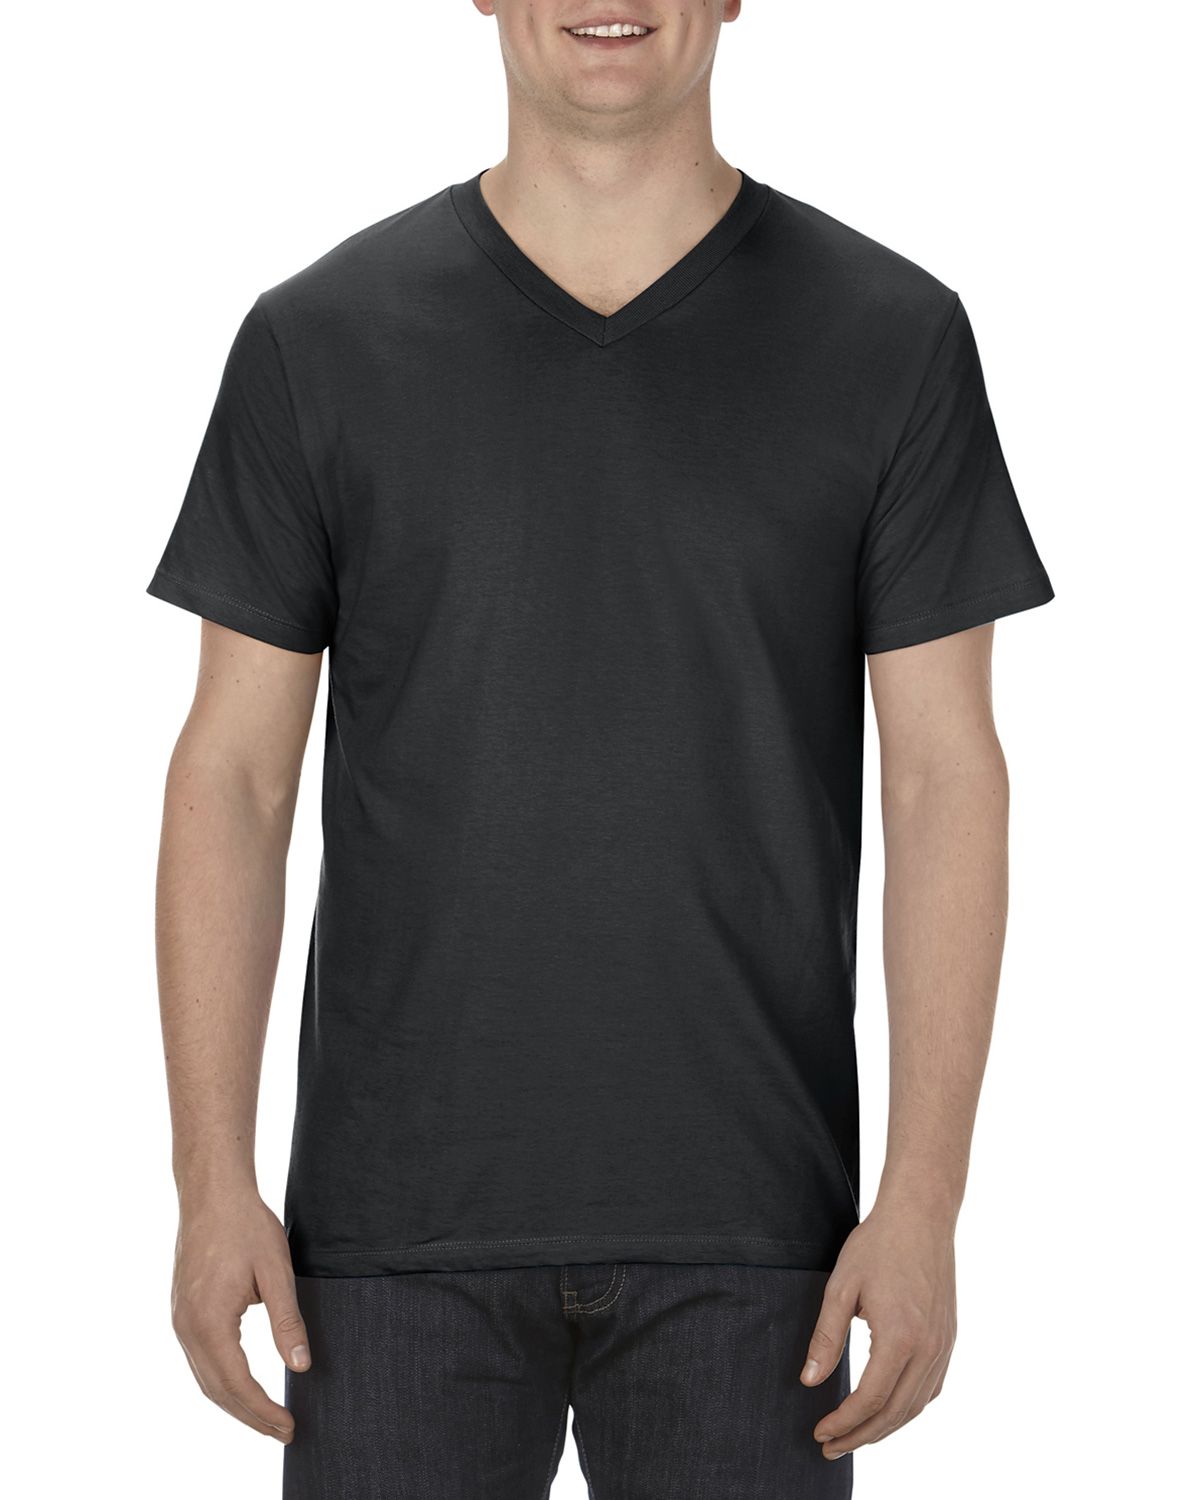 Alstyle AL5300 Men's 4.3 oz. Ringspun Cotton V-Neck T-Shirt